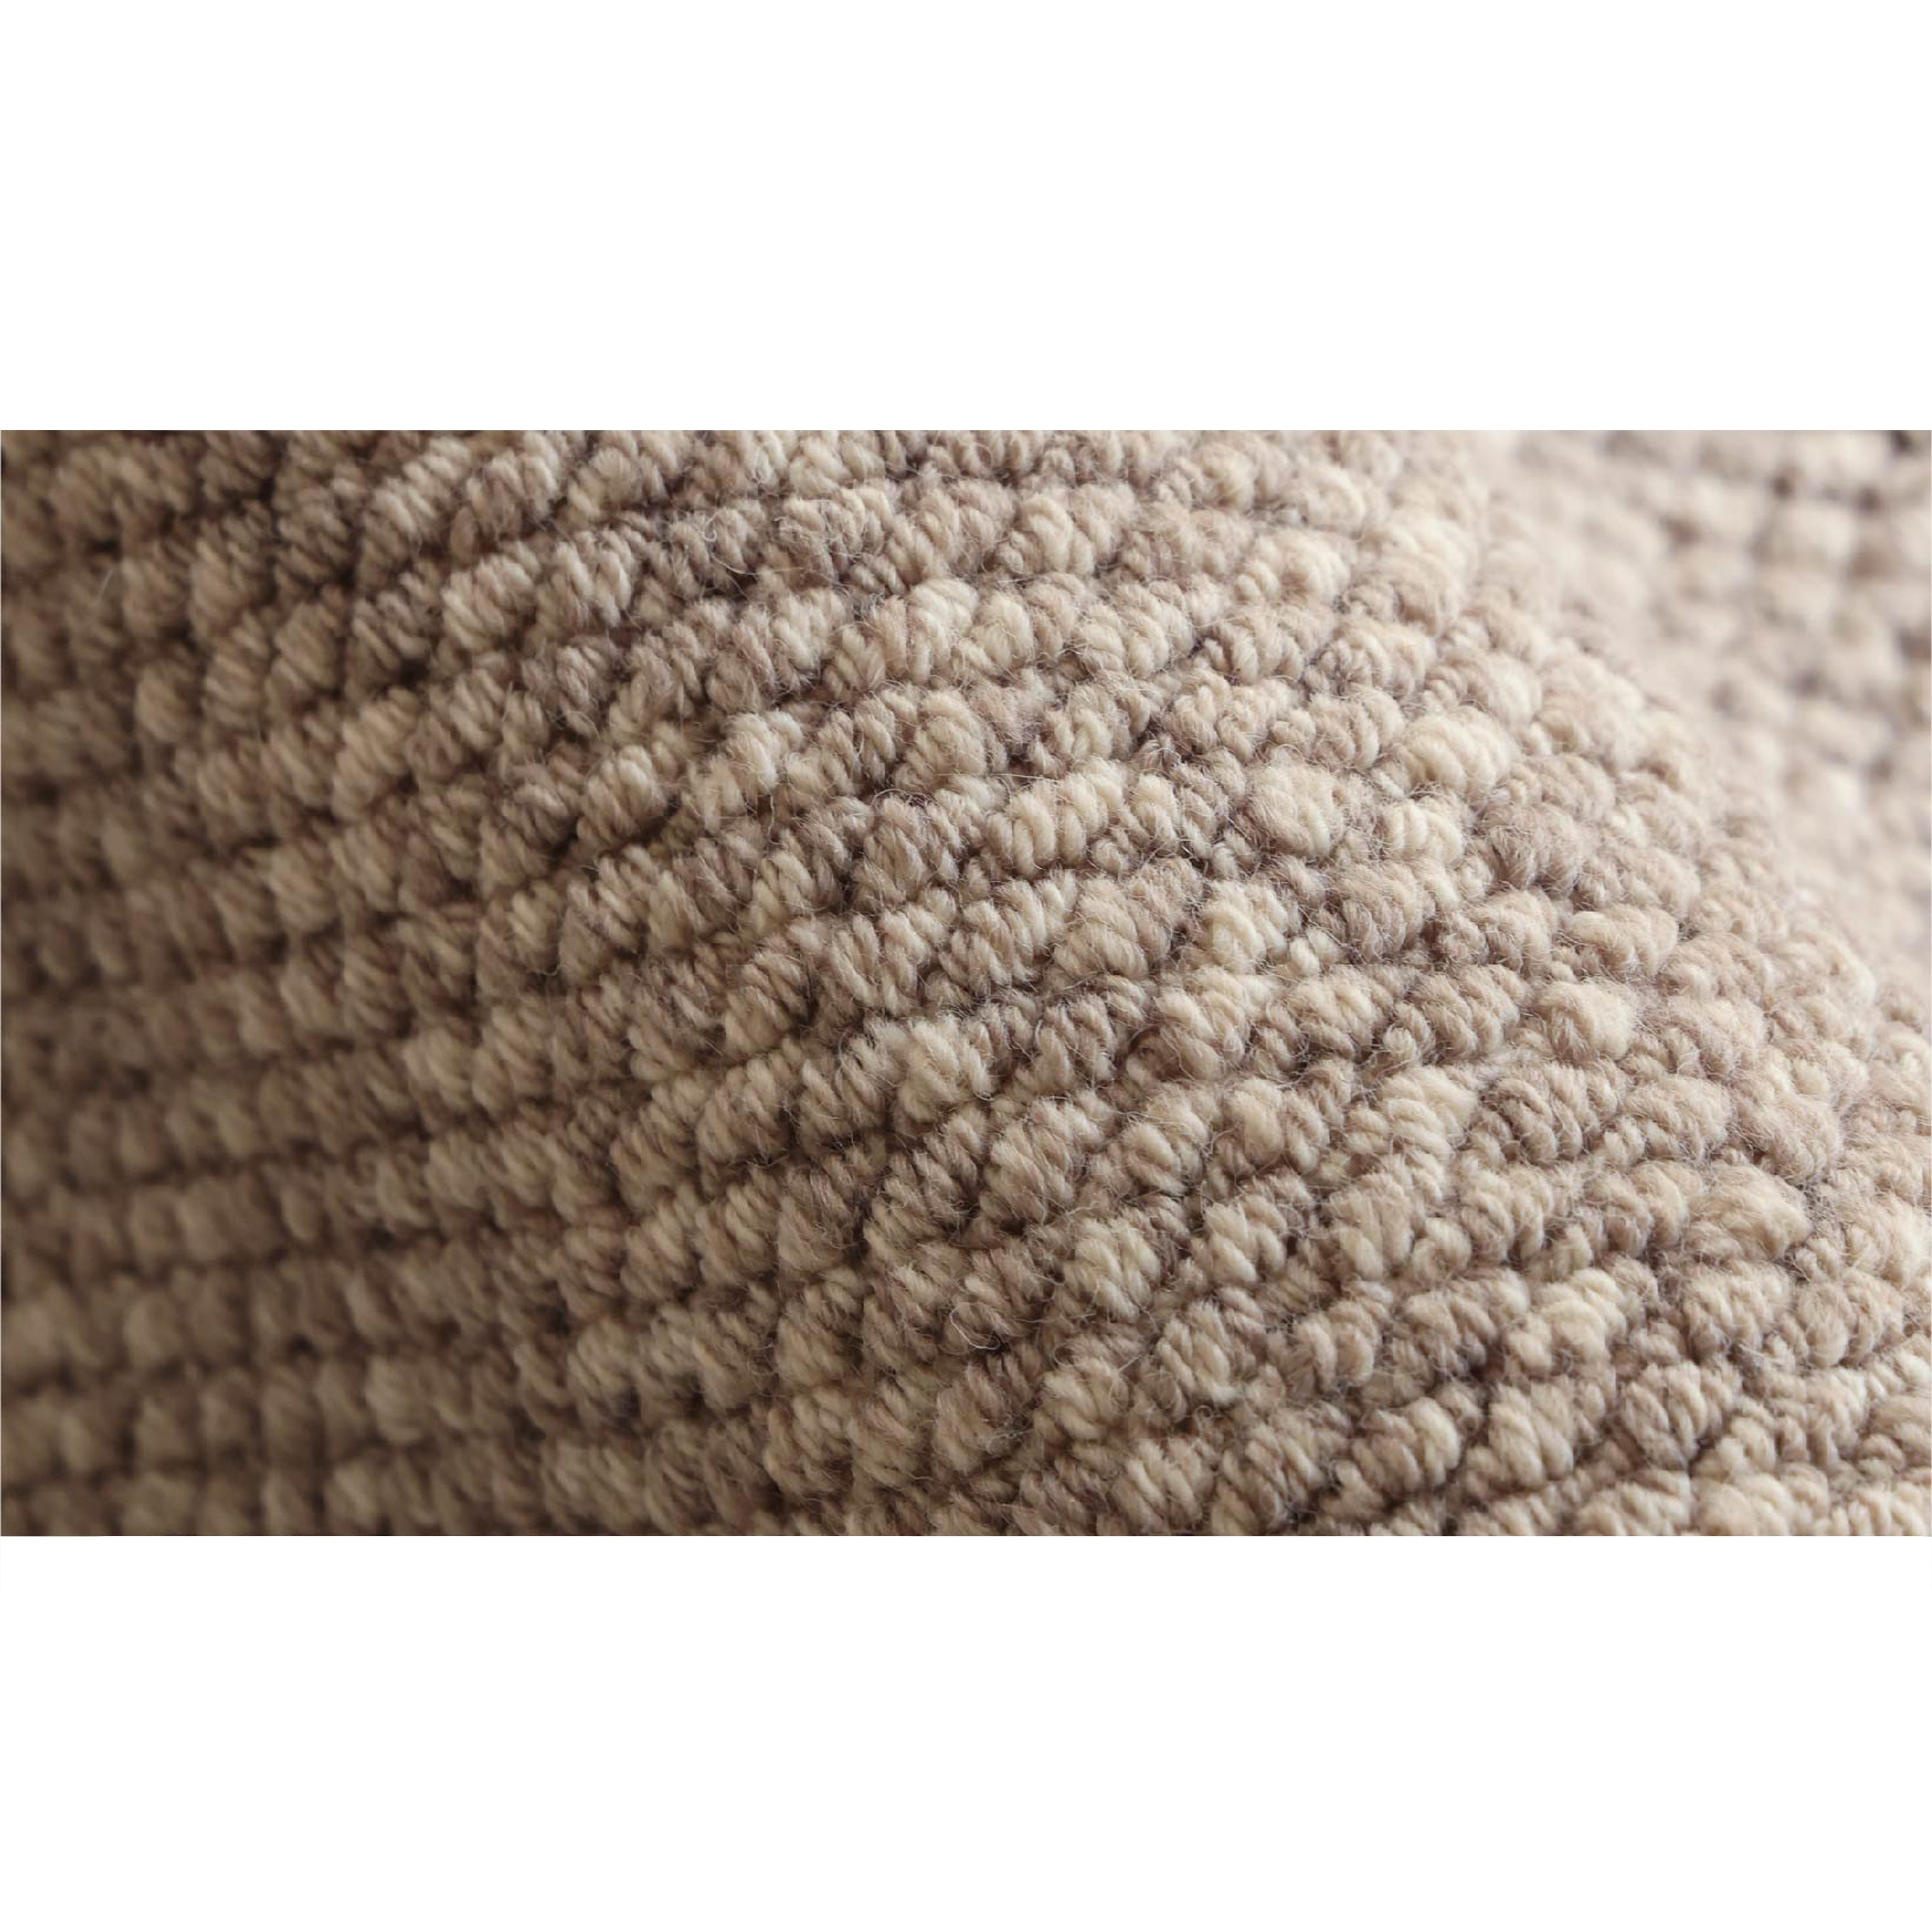 MS068 - Wool